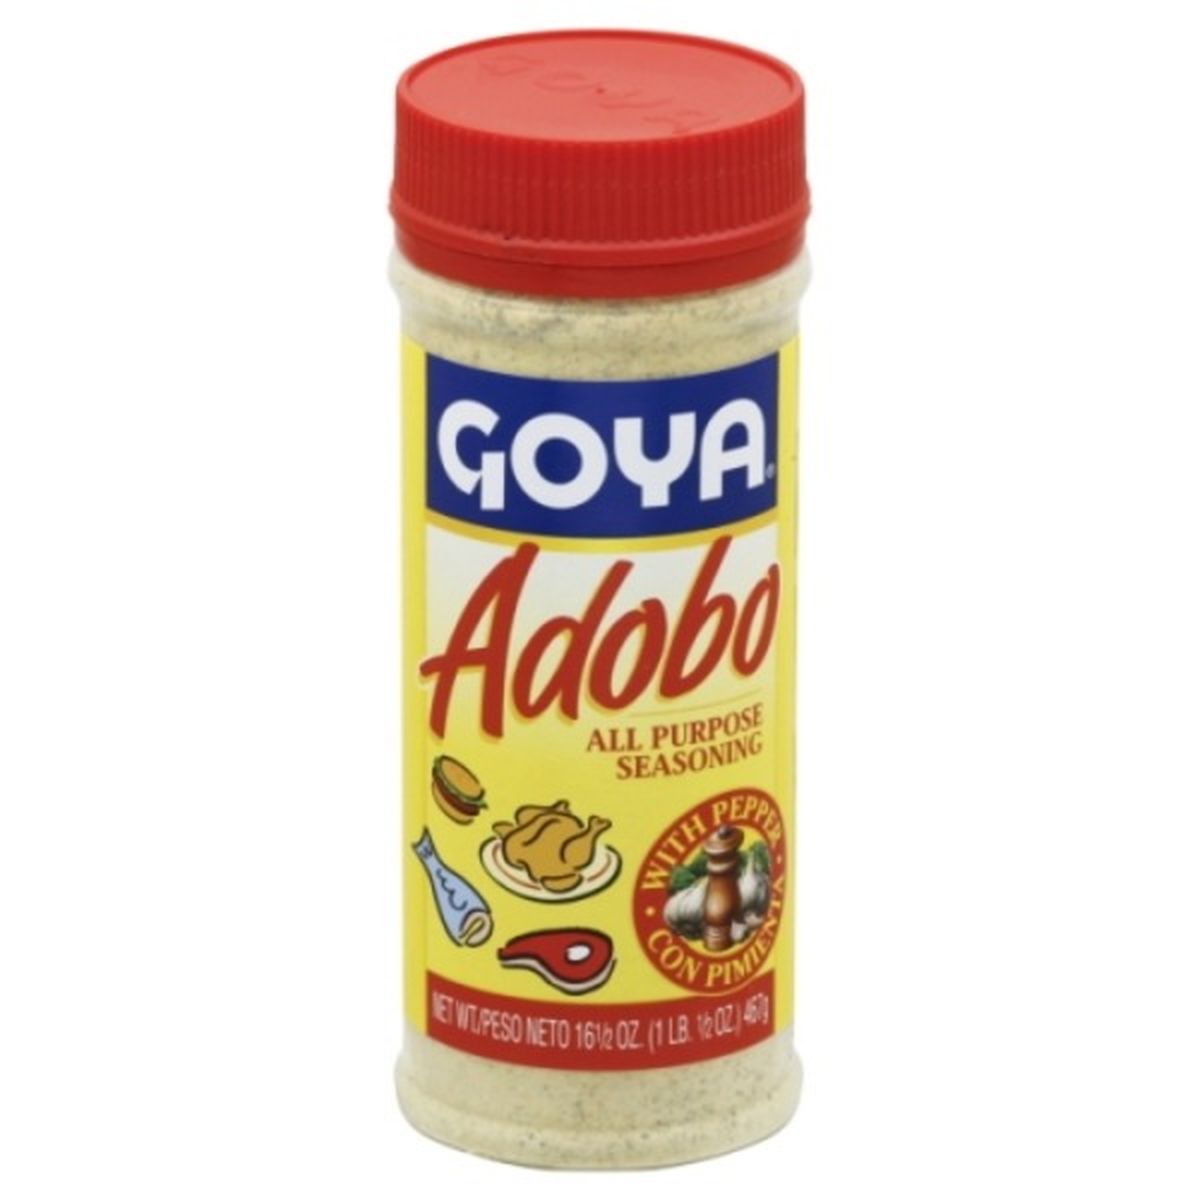 Calories in Goya Seasoning, All Purpose Adobo, with Pepper